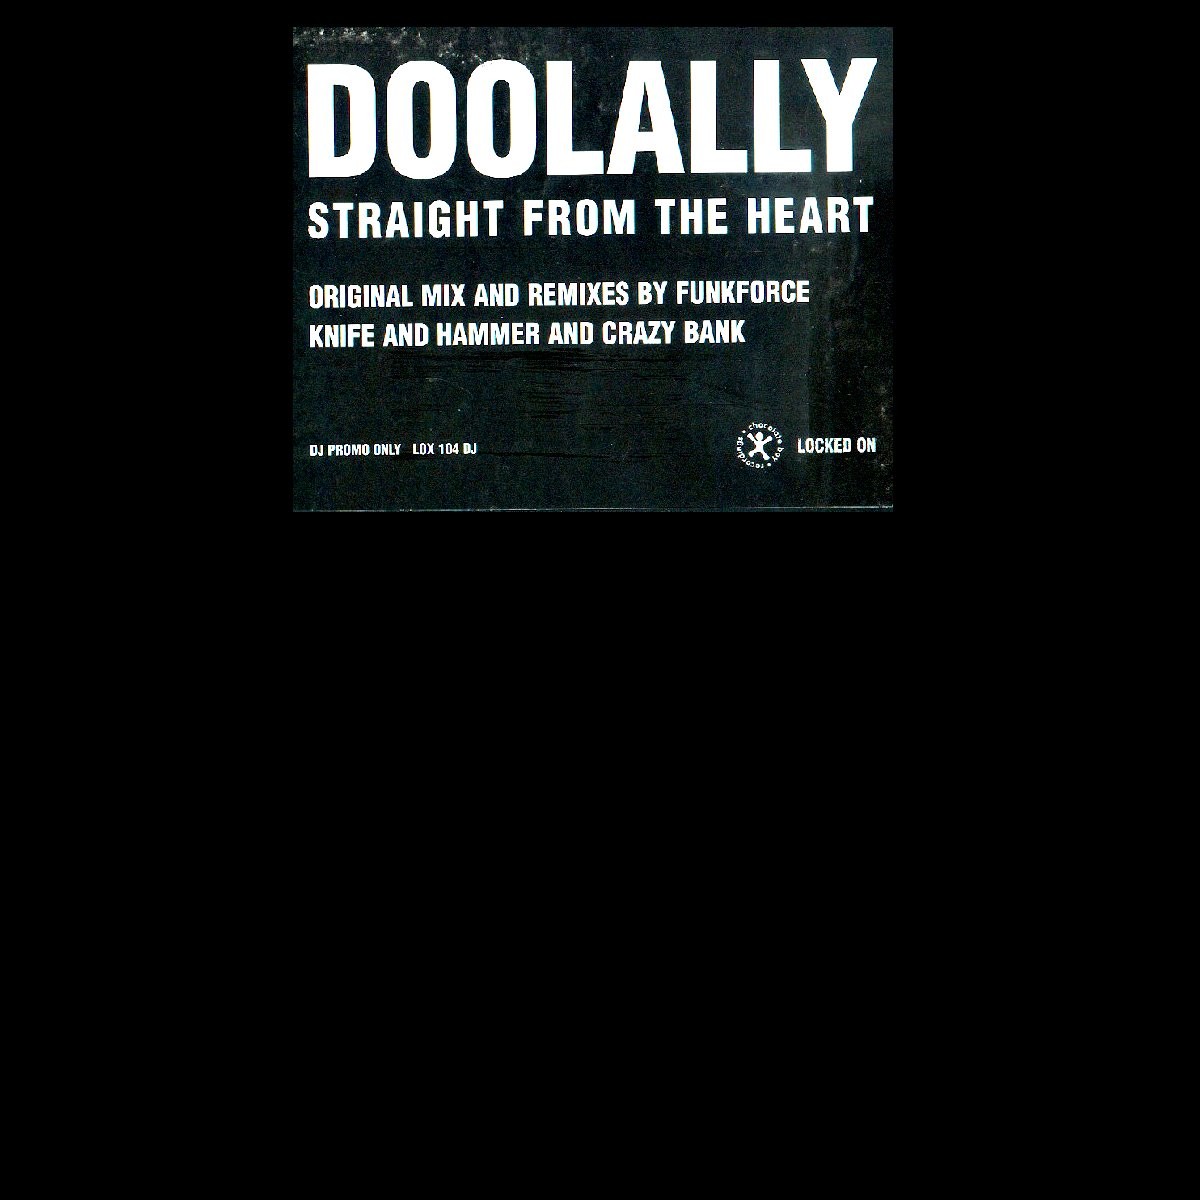 Doolally - Straight from the heart (Original / Club mix / Doolapella / Knife & Hammer mix / Crazy Bank Remix / Funkforce Mxs)